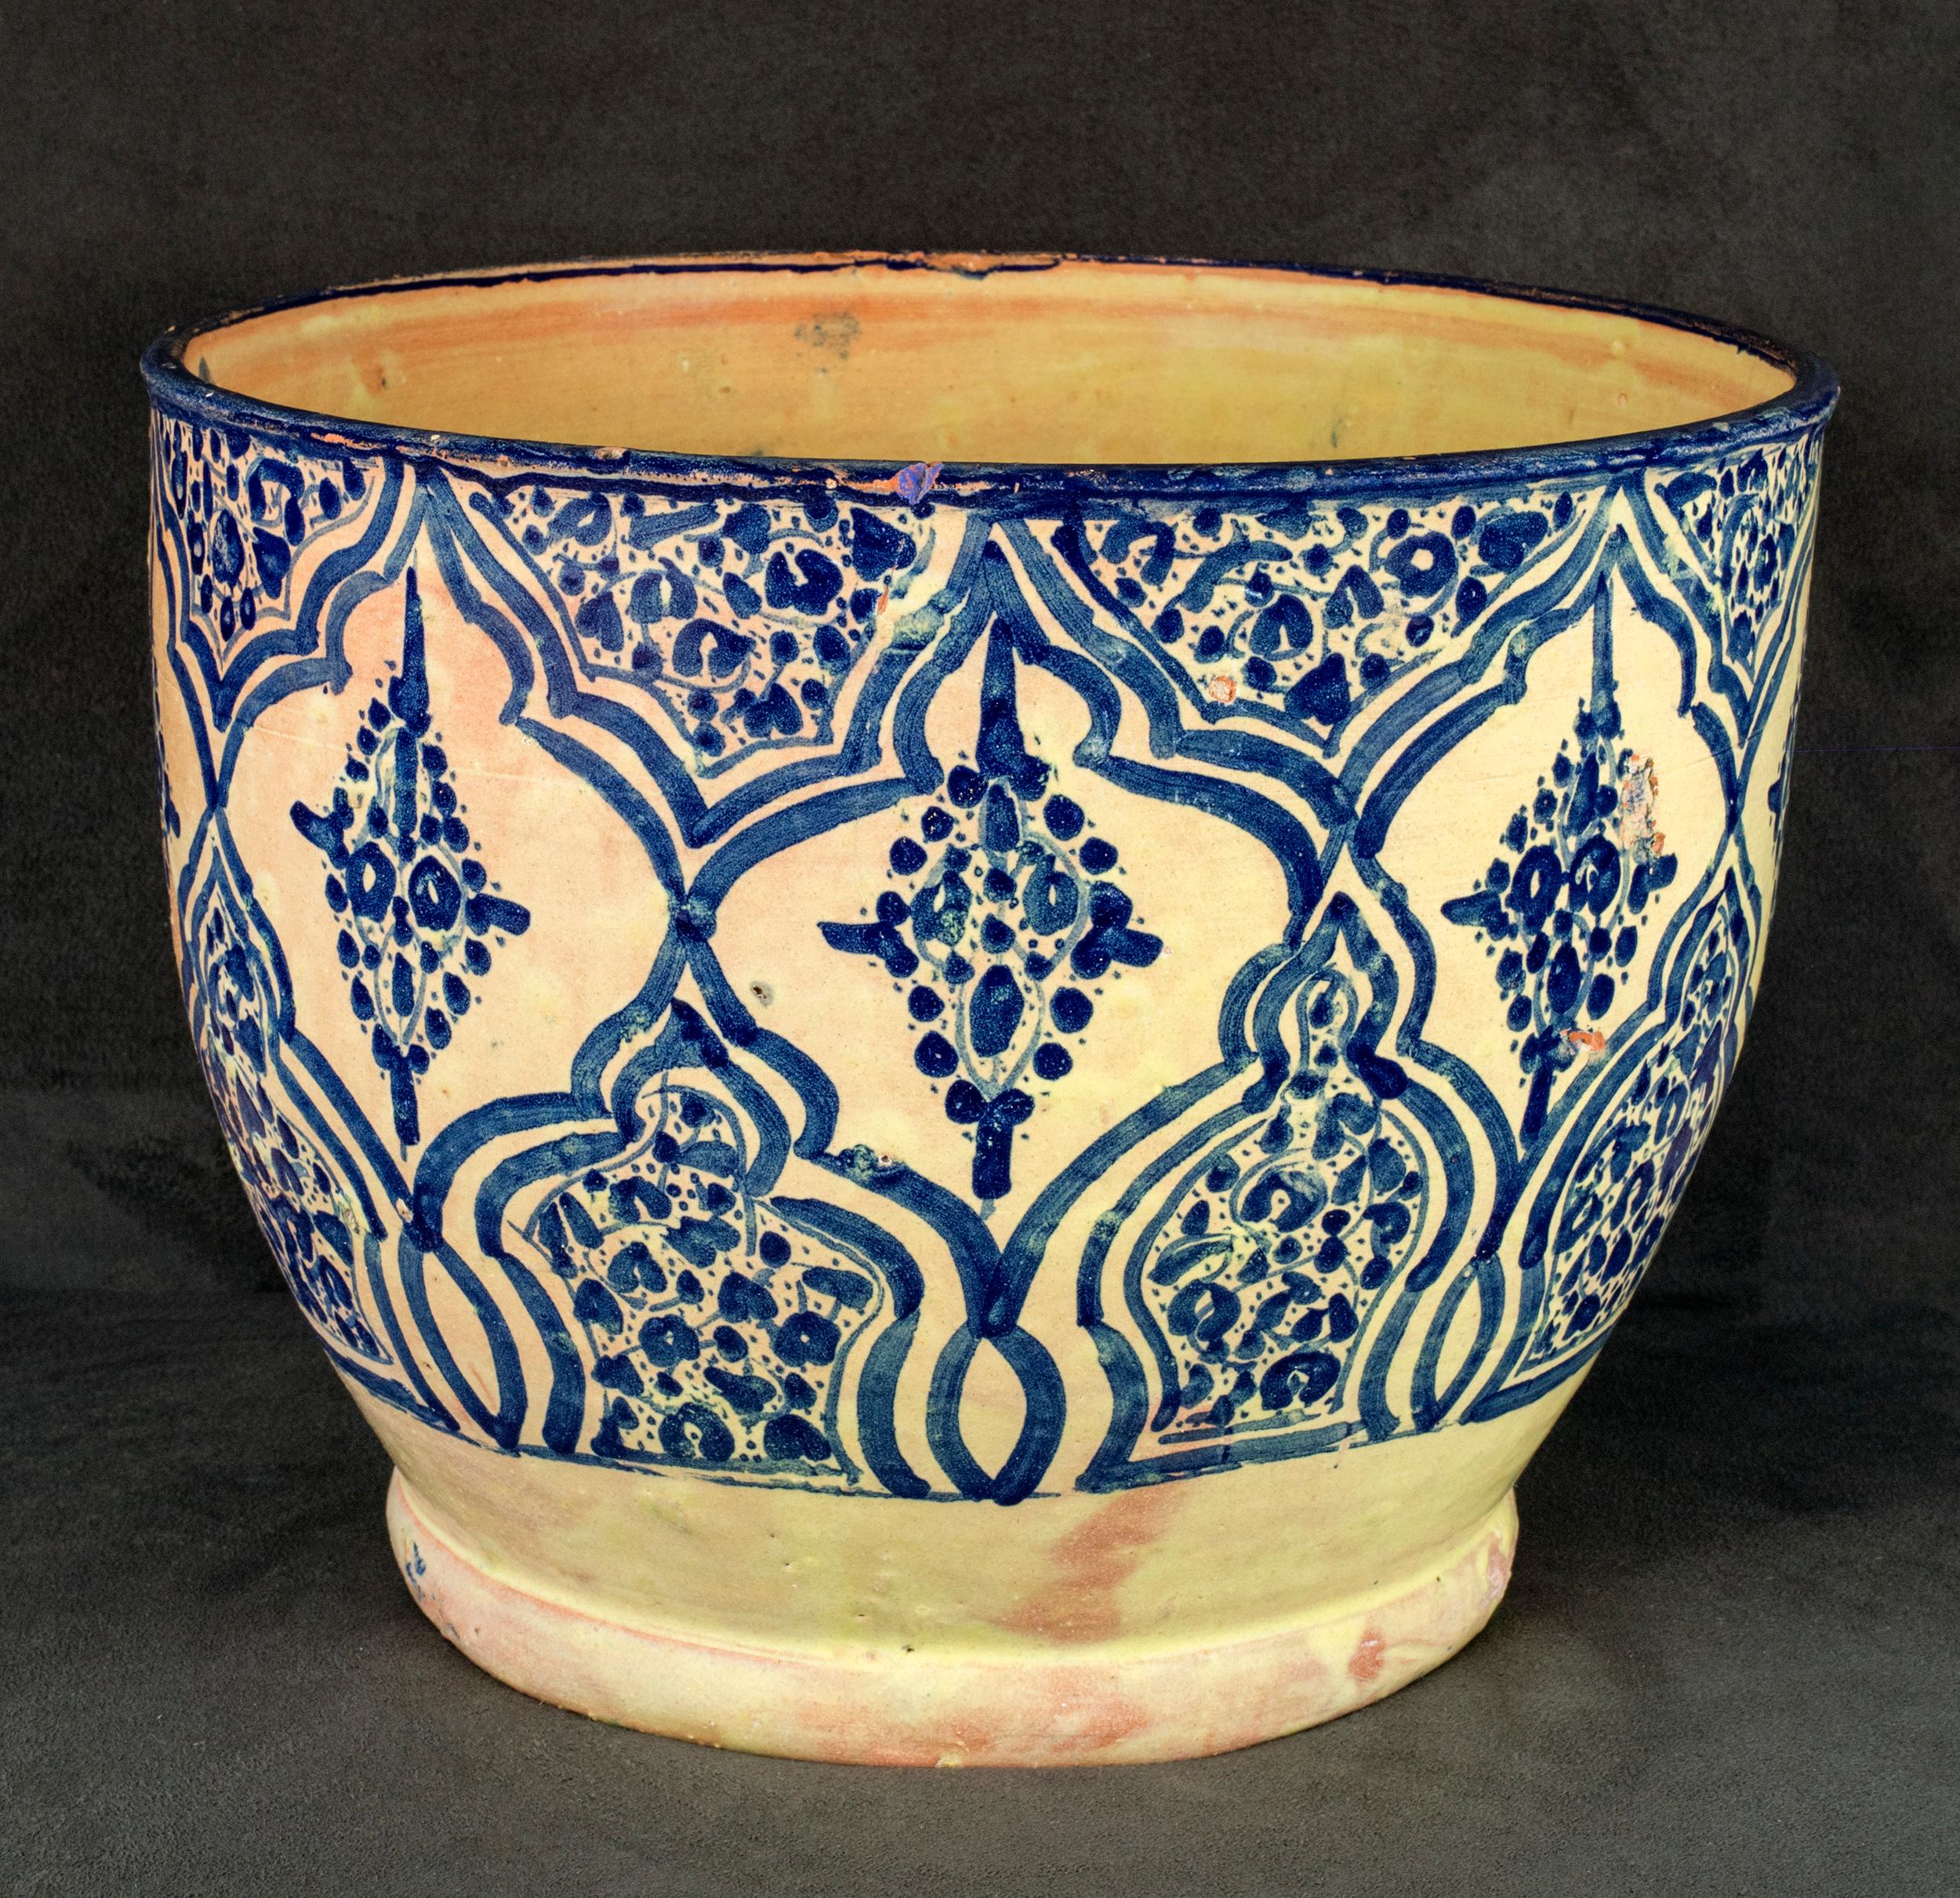 Moroccan, Fez or Meknes: Tall bowl (Jobbana) with geometric designs